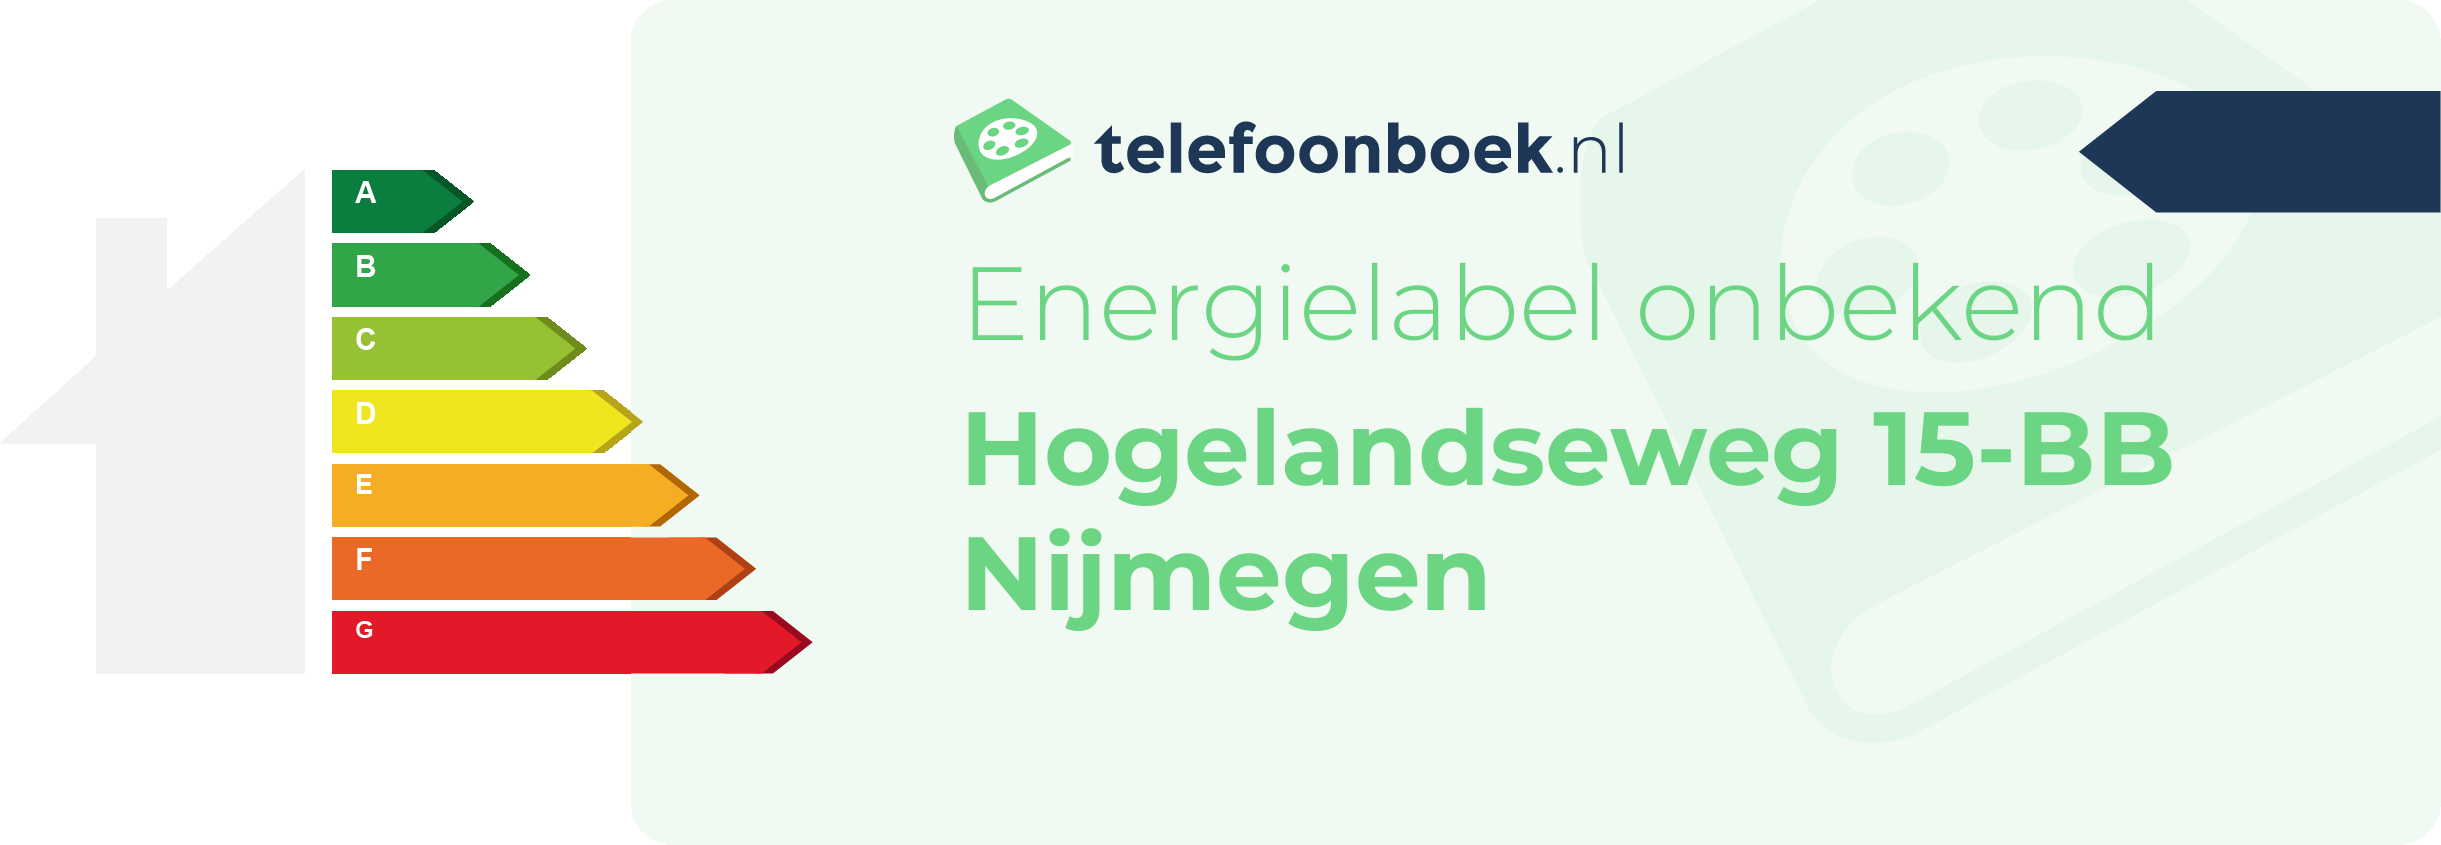 Energielabel Hogelandseweg 15-BB Nijmegen